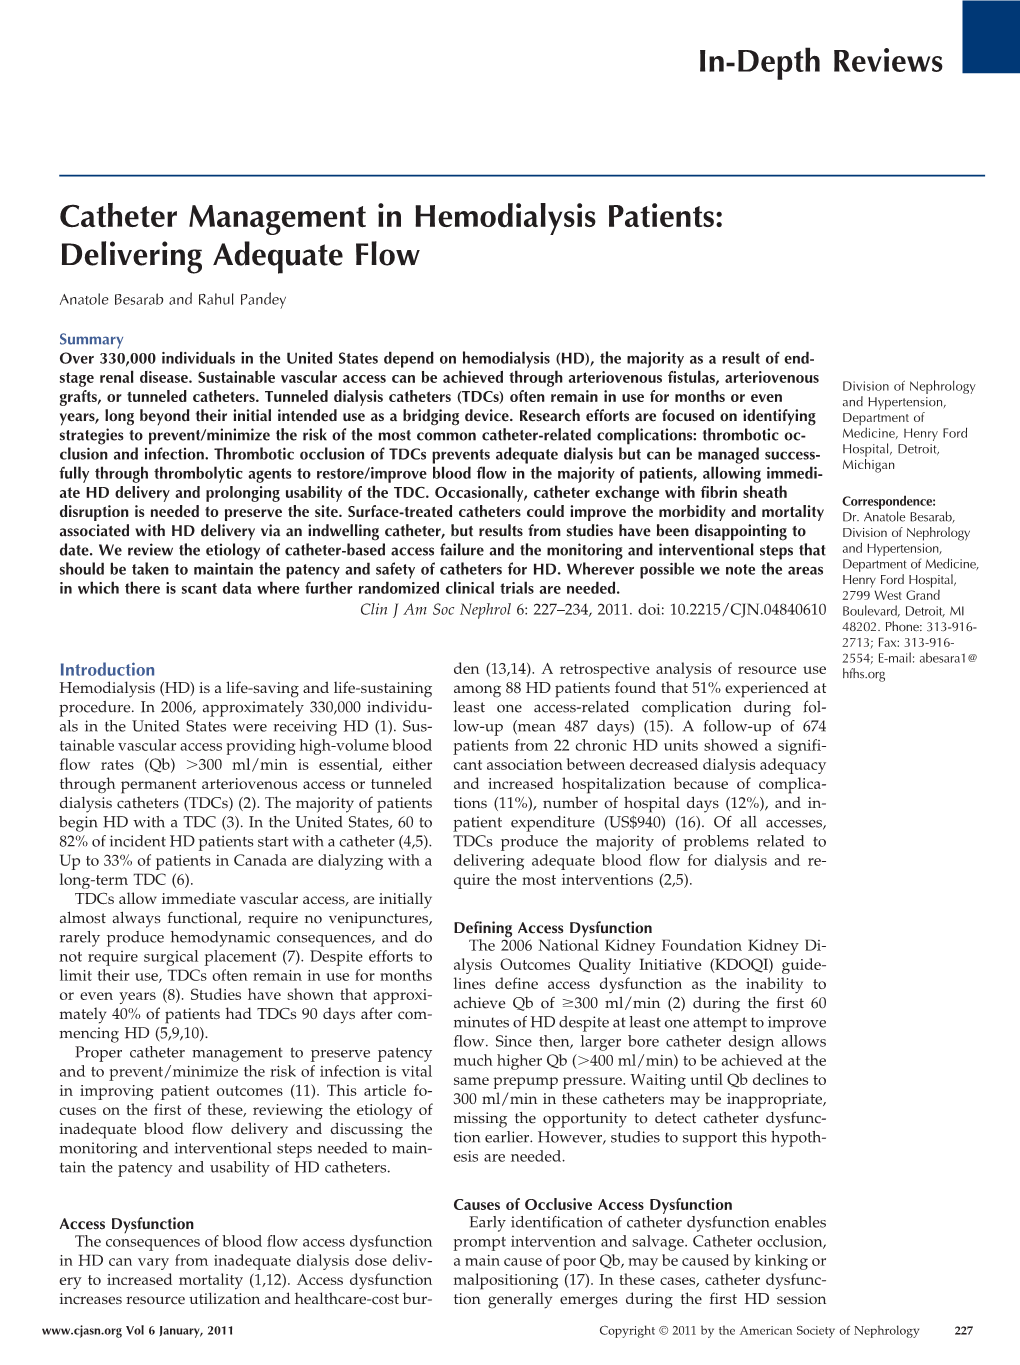 Catheter Management in Hemodialysis Patients: Delivering Adequate Flow